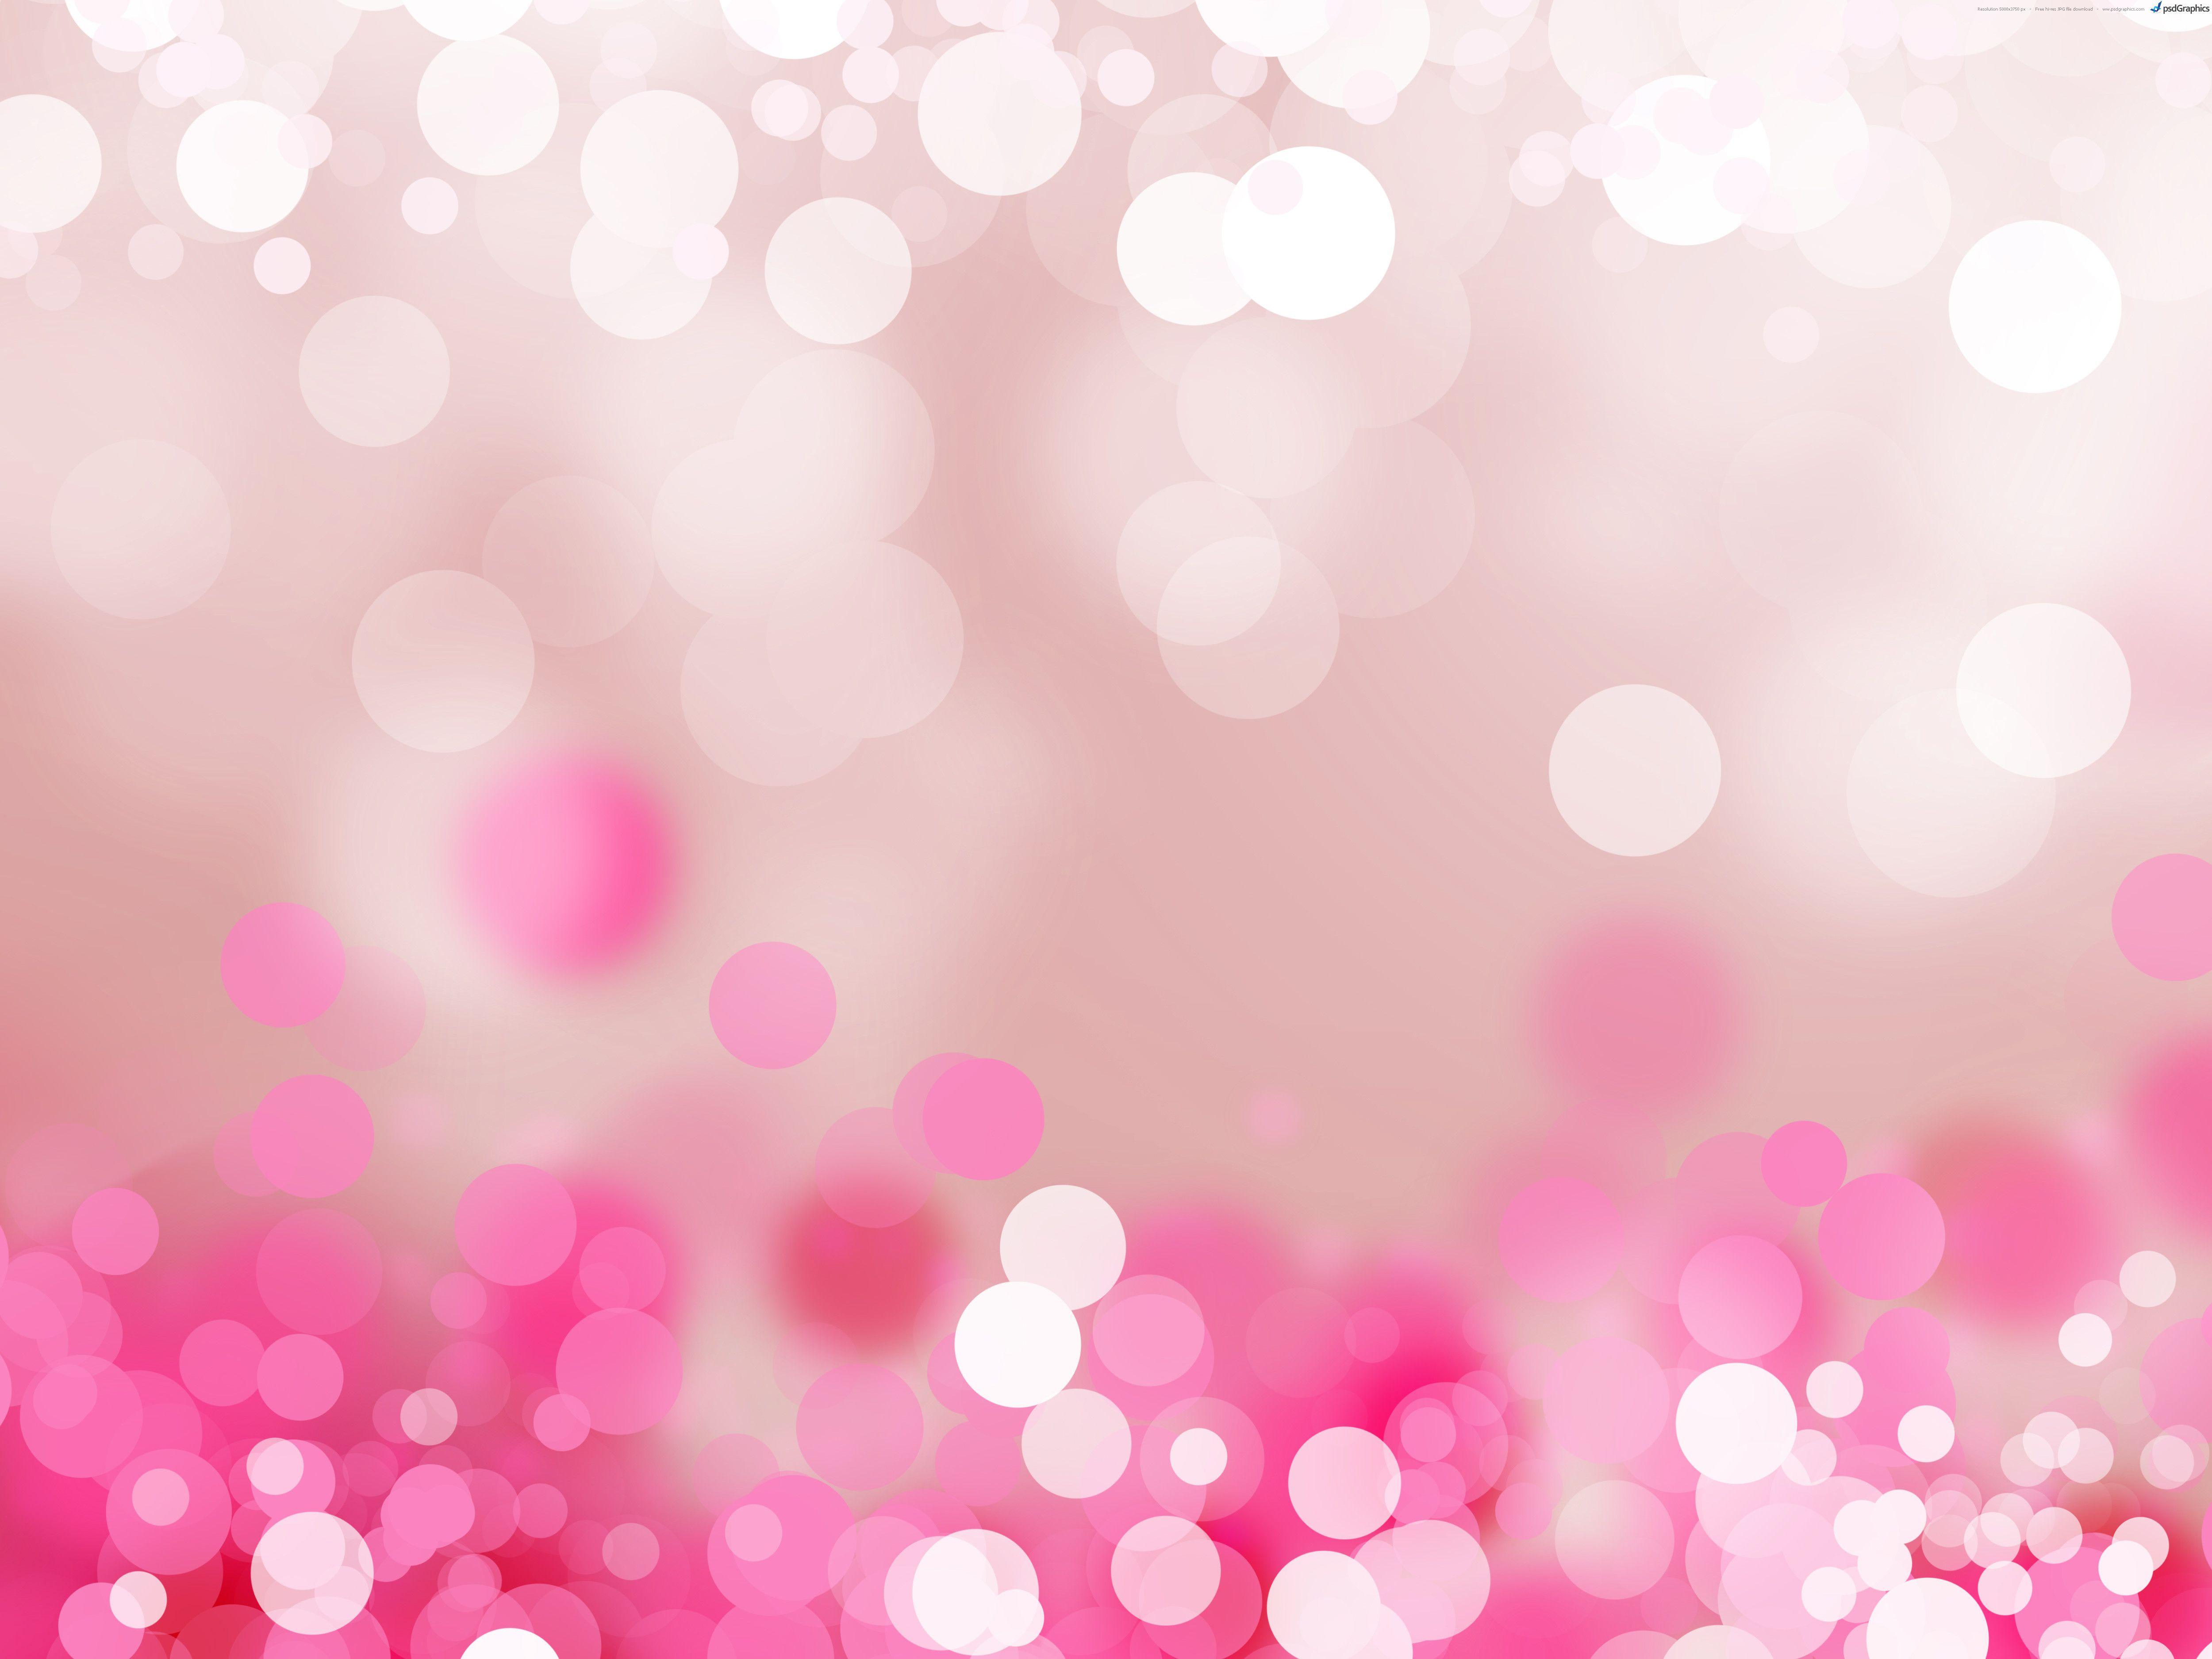 Light Pink Backgrounds